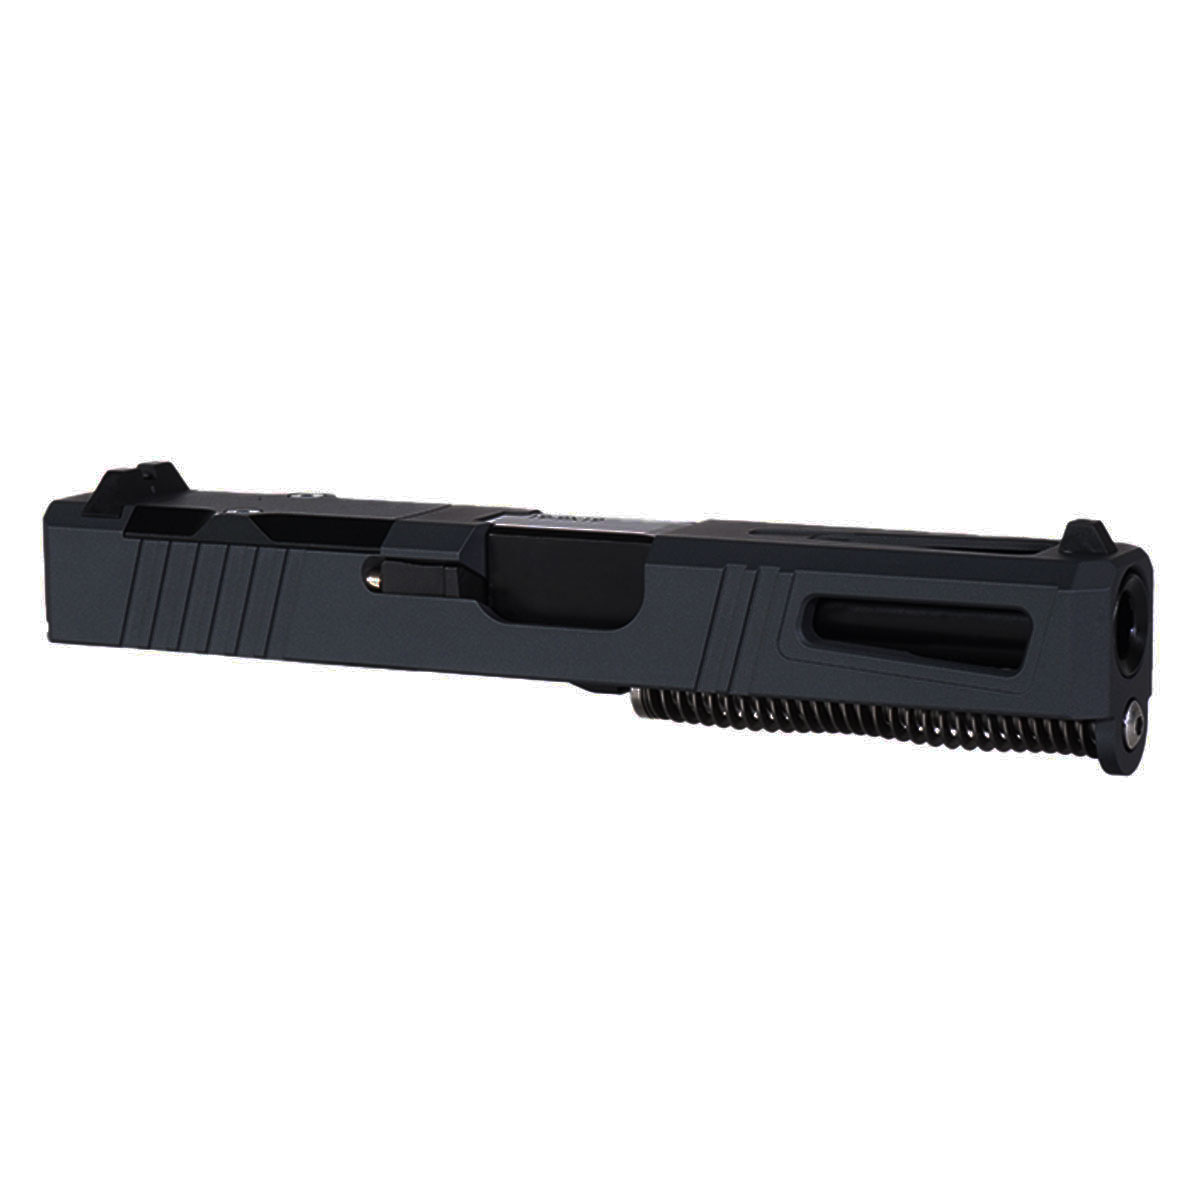 OTD 'Apollo' 9mm Complete Slide Kit - Glock 19 Gen 1-3 Compatible